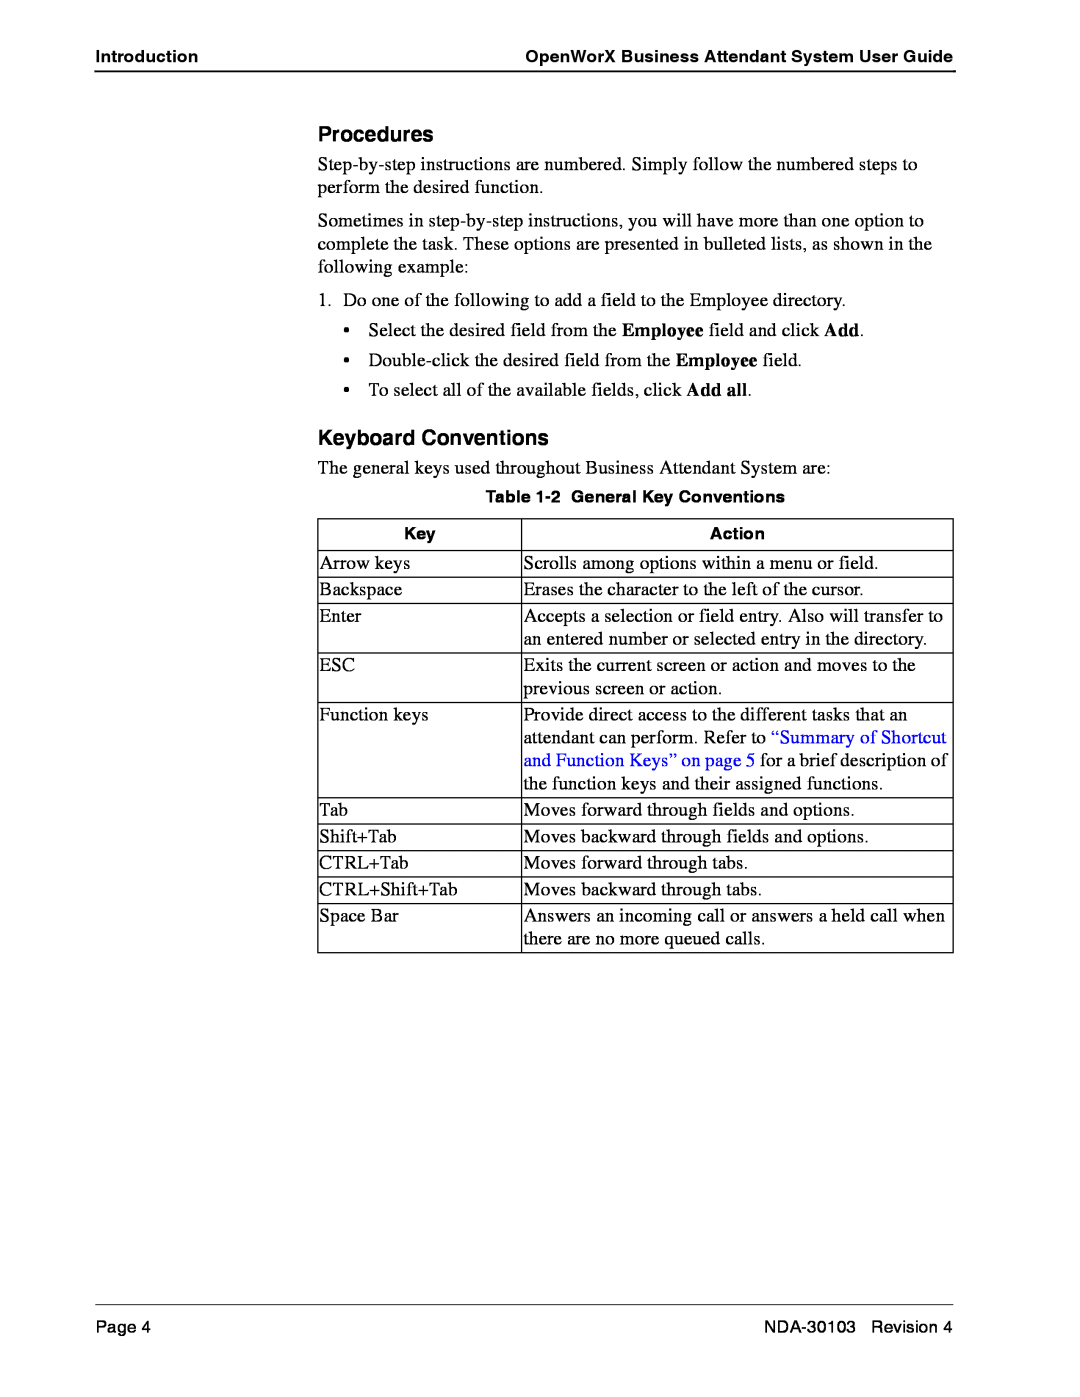 NEC NDA-30103-004 manual Procedures, Keyboard Conventions 